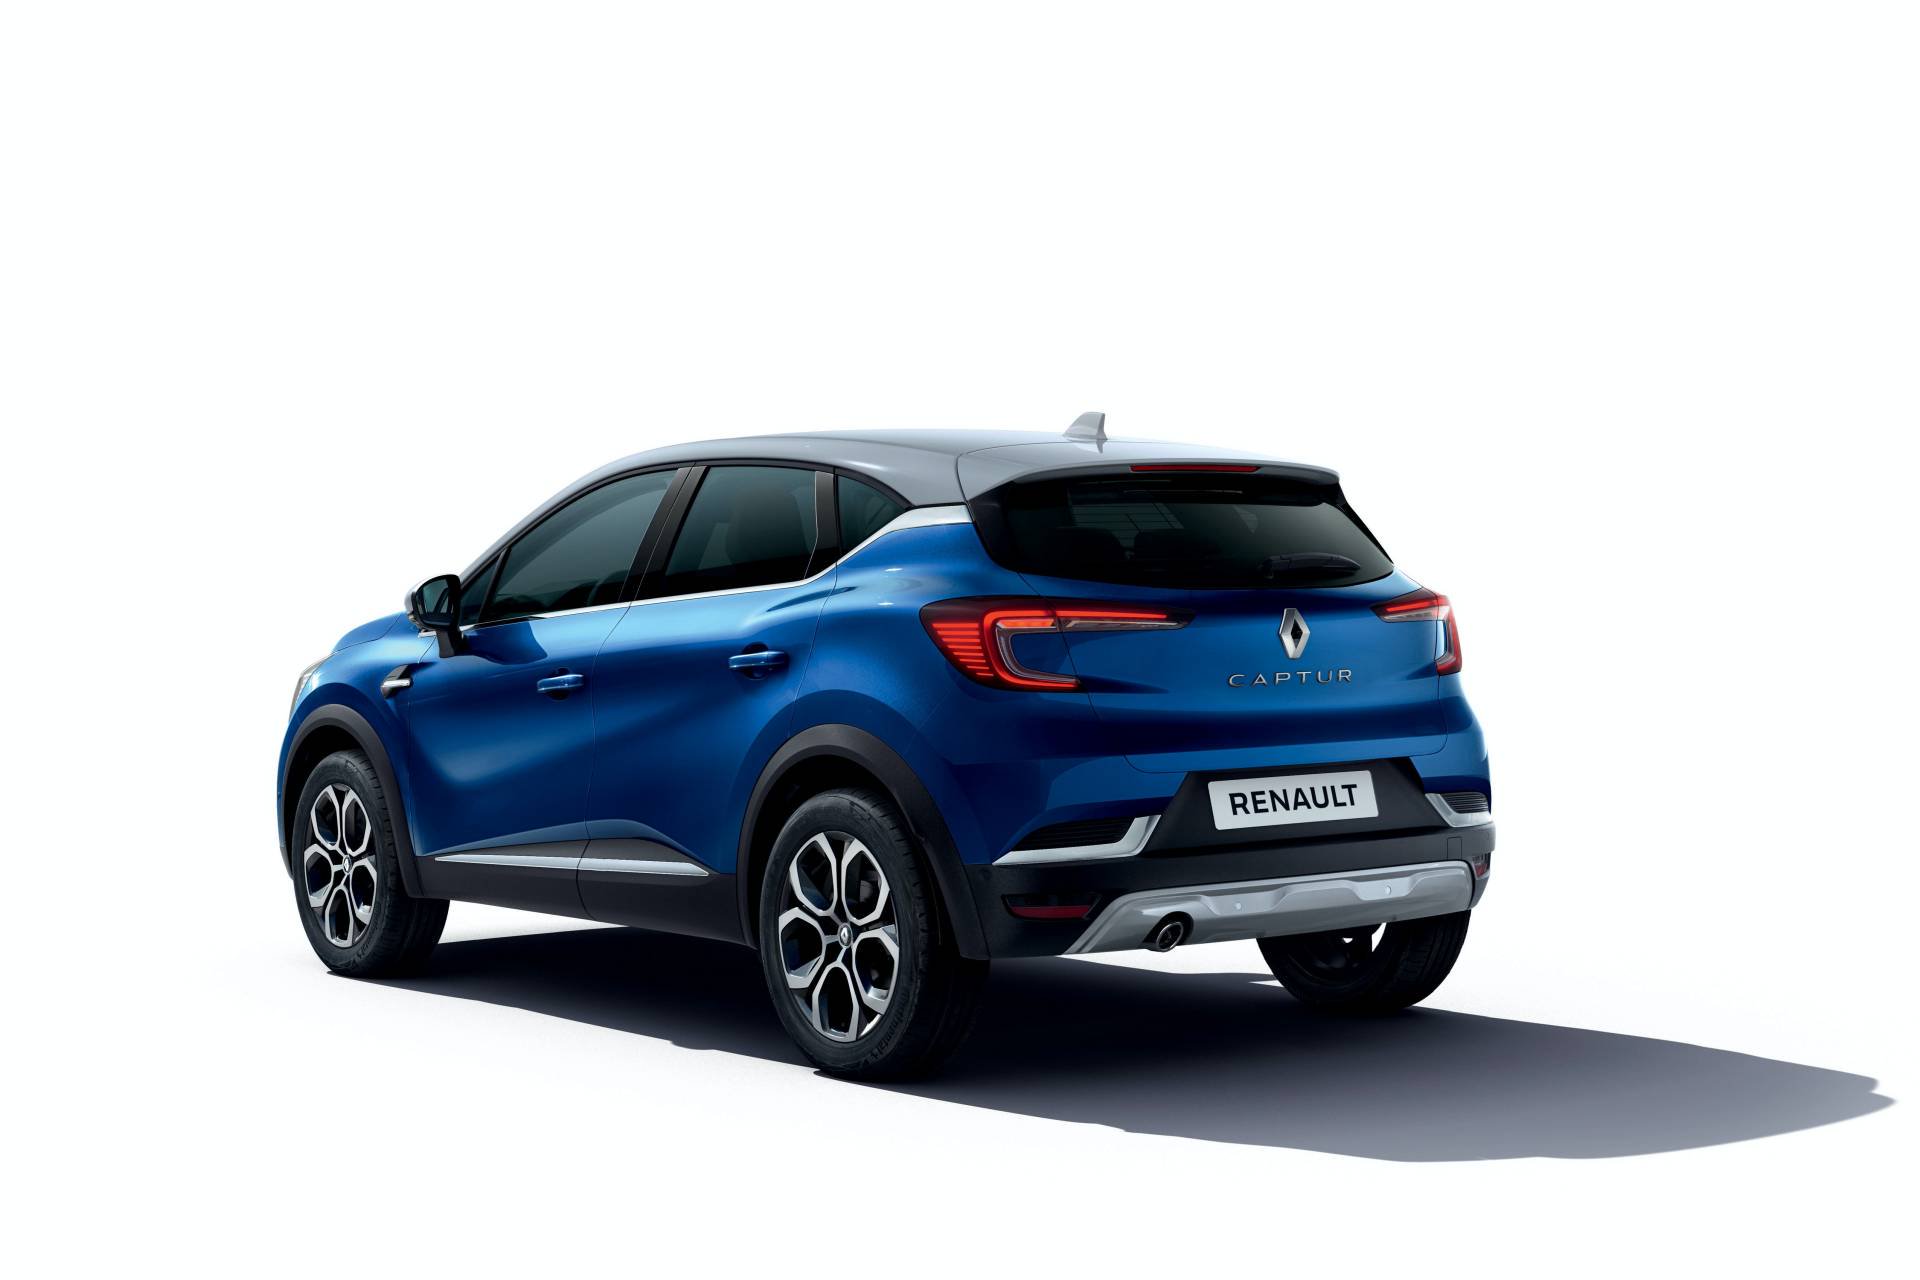 2020 Renault Captur Mega Gallery Reveals Better Styling